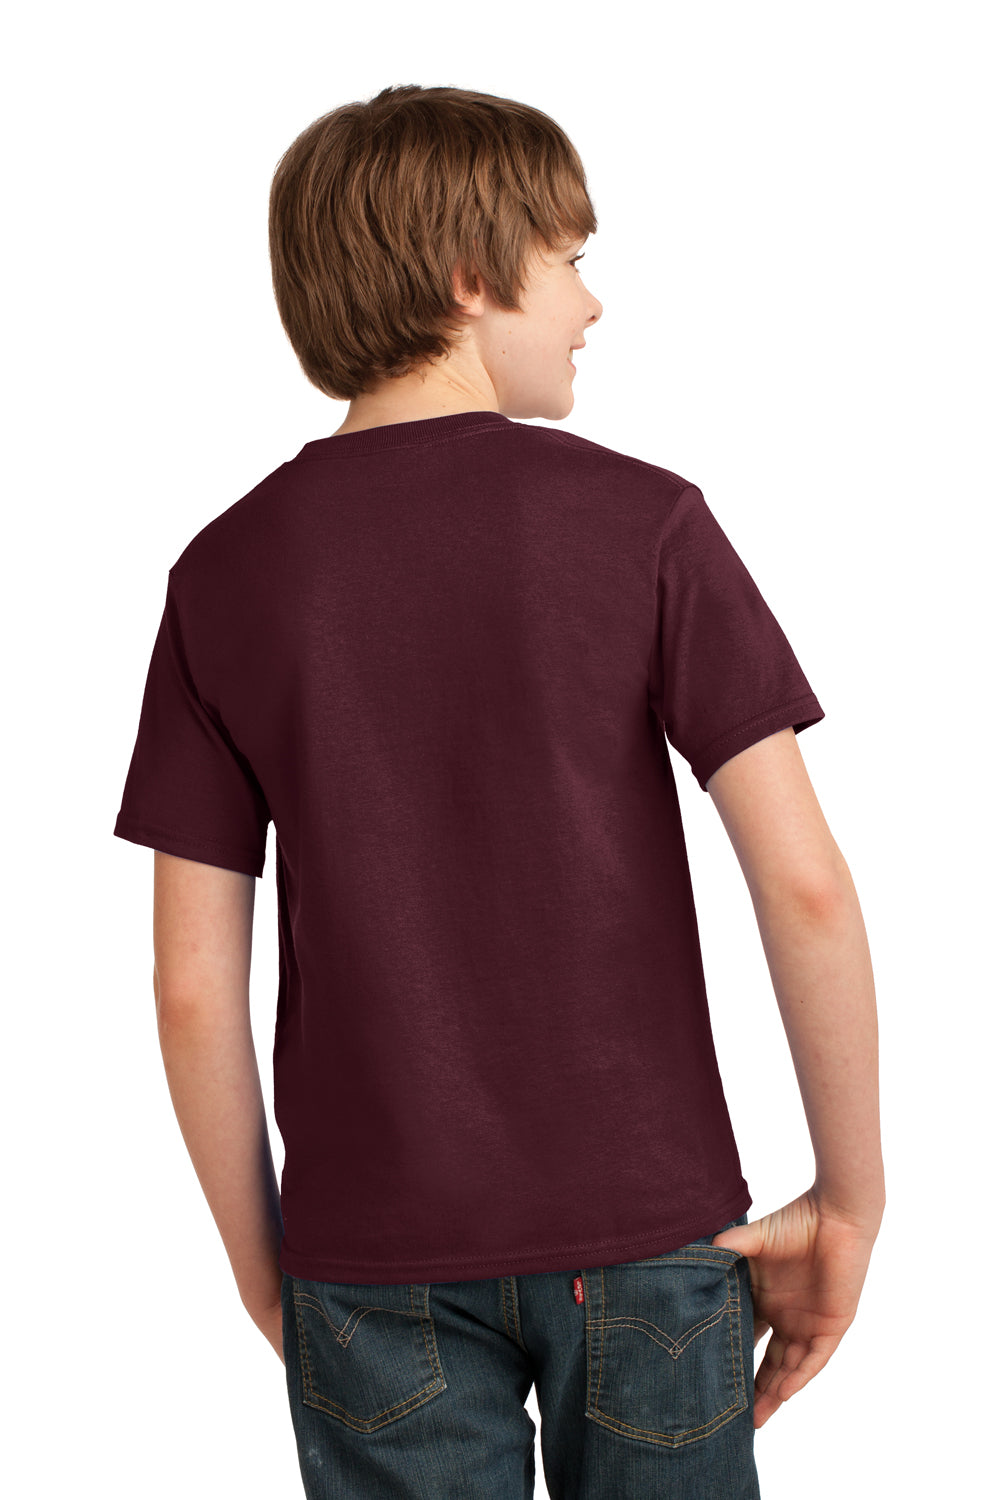 Port & Company PC61Y Youth Essential Short Sleeve Crewneck T-Shirt Maroon Back